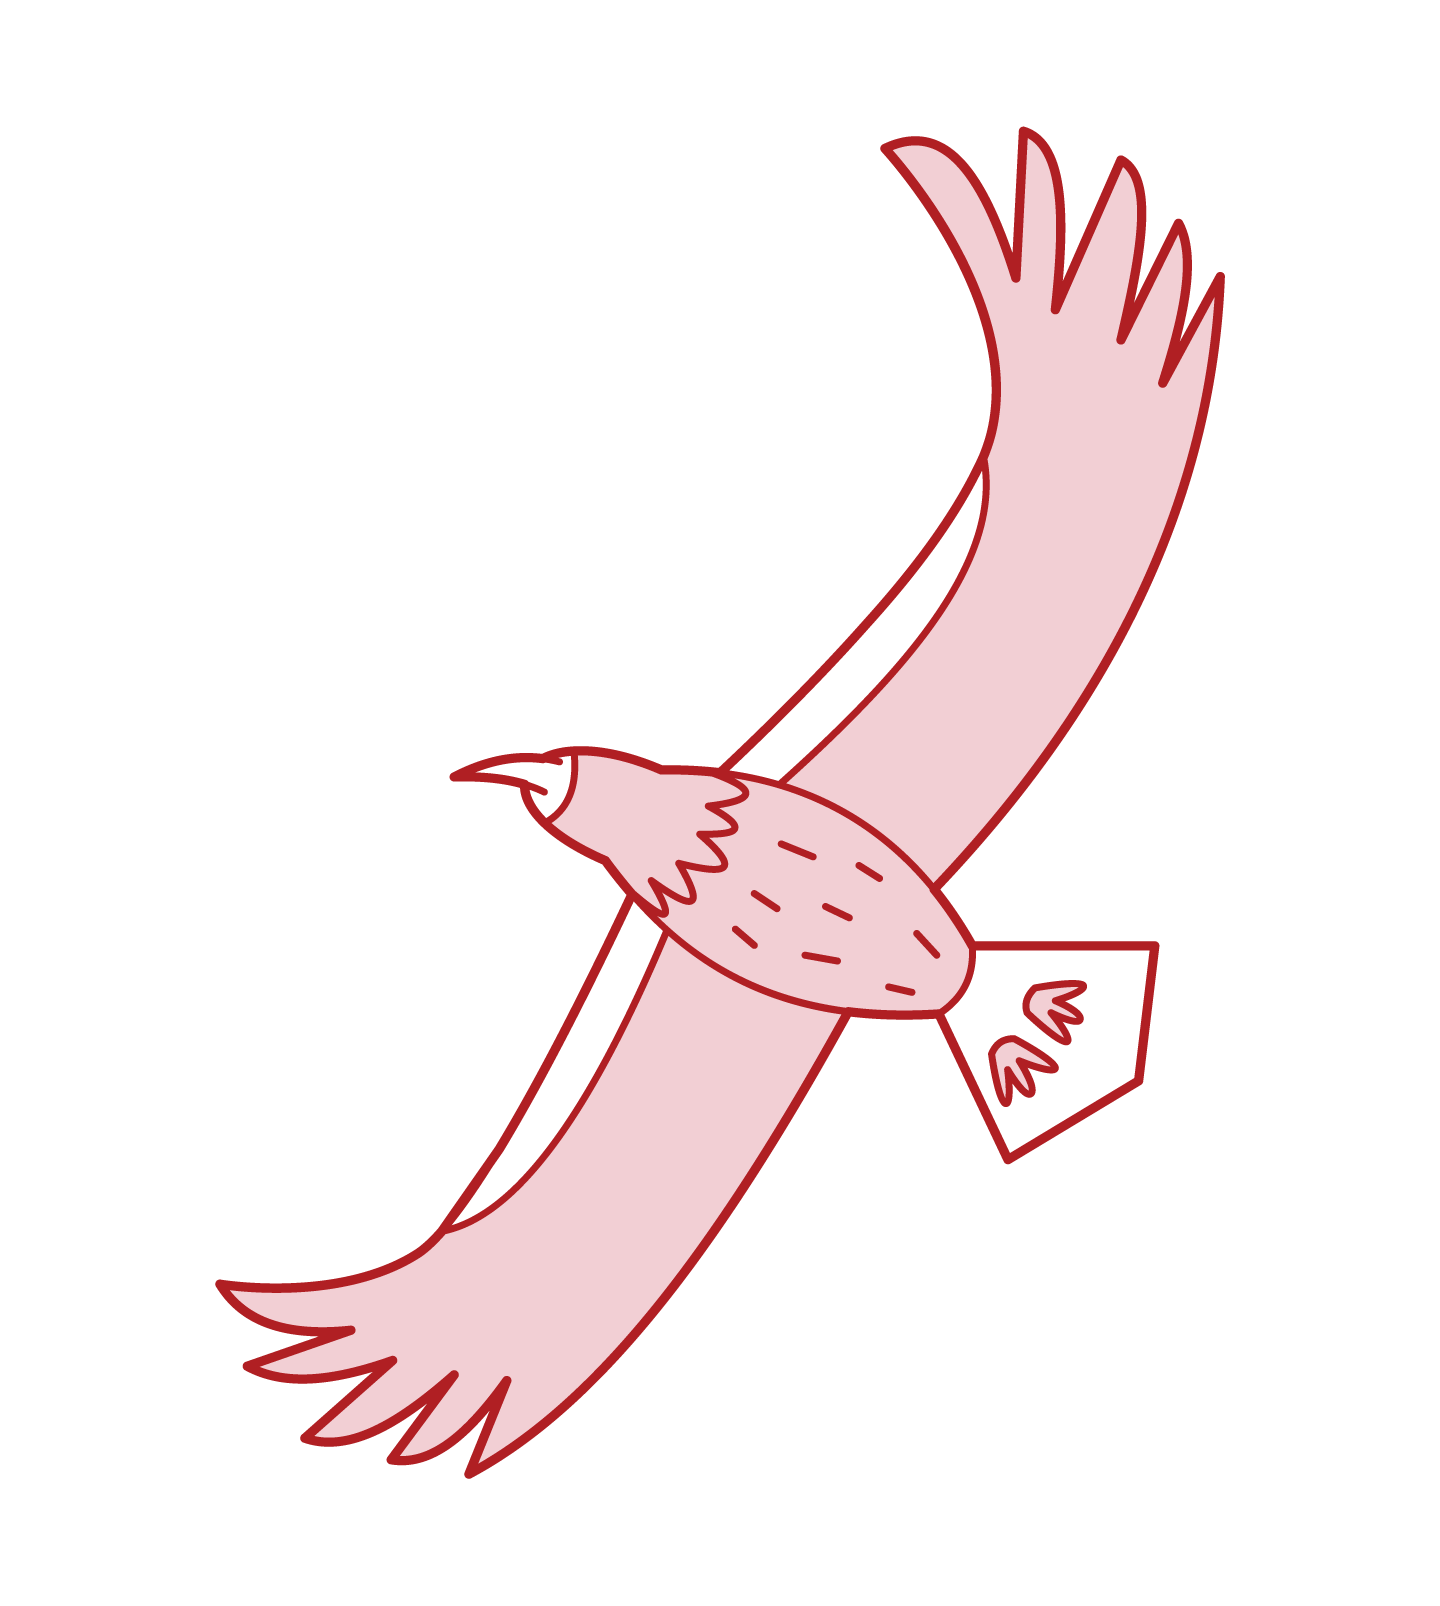 Illustration of a flying sea eagle